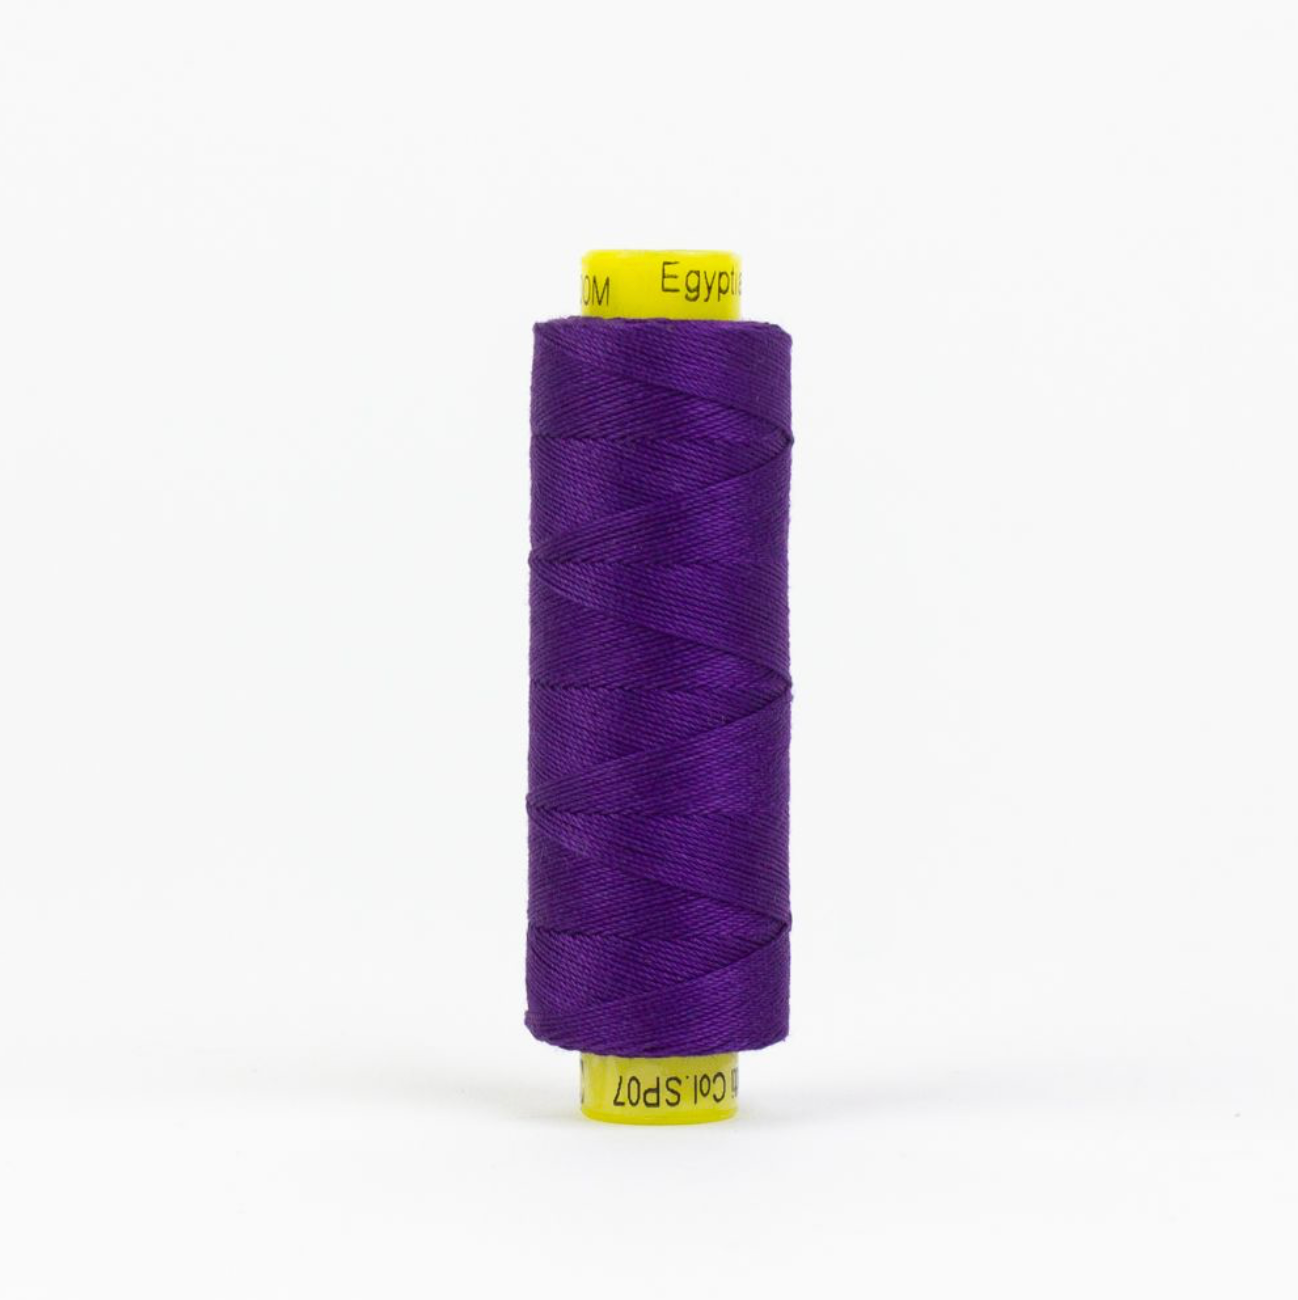 Spagetti 12wt Egyptian Cotton Thread - 109yd Spool - Deep Royal Purple SP-07